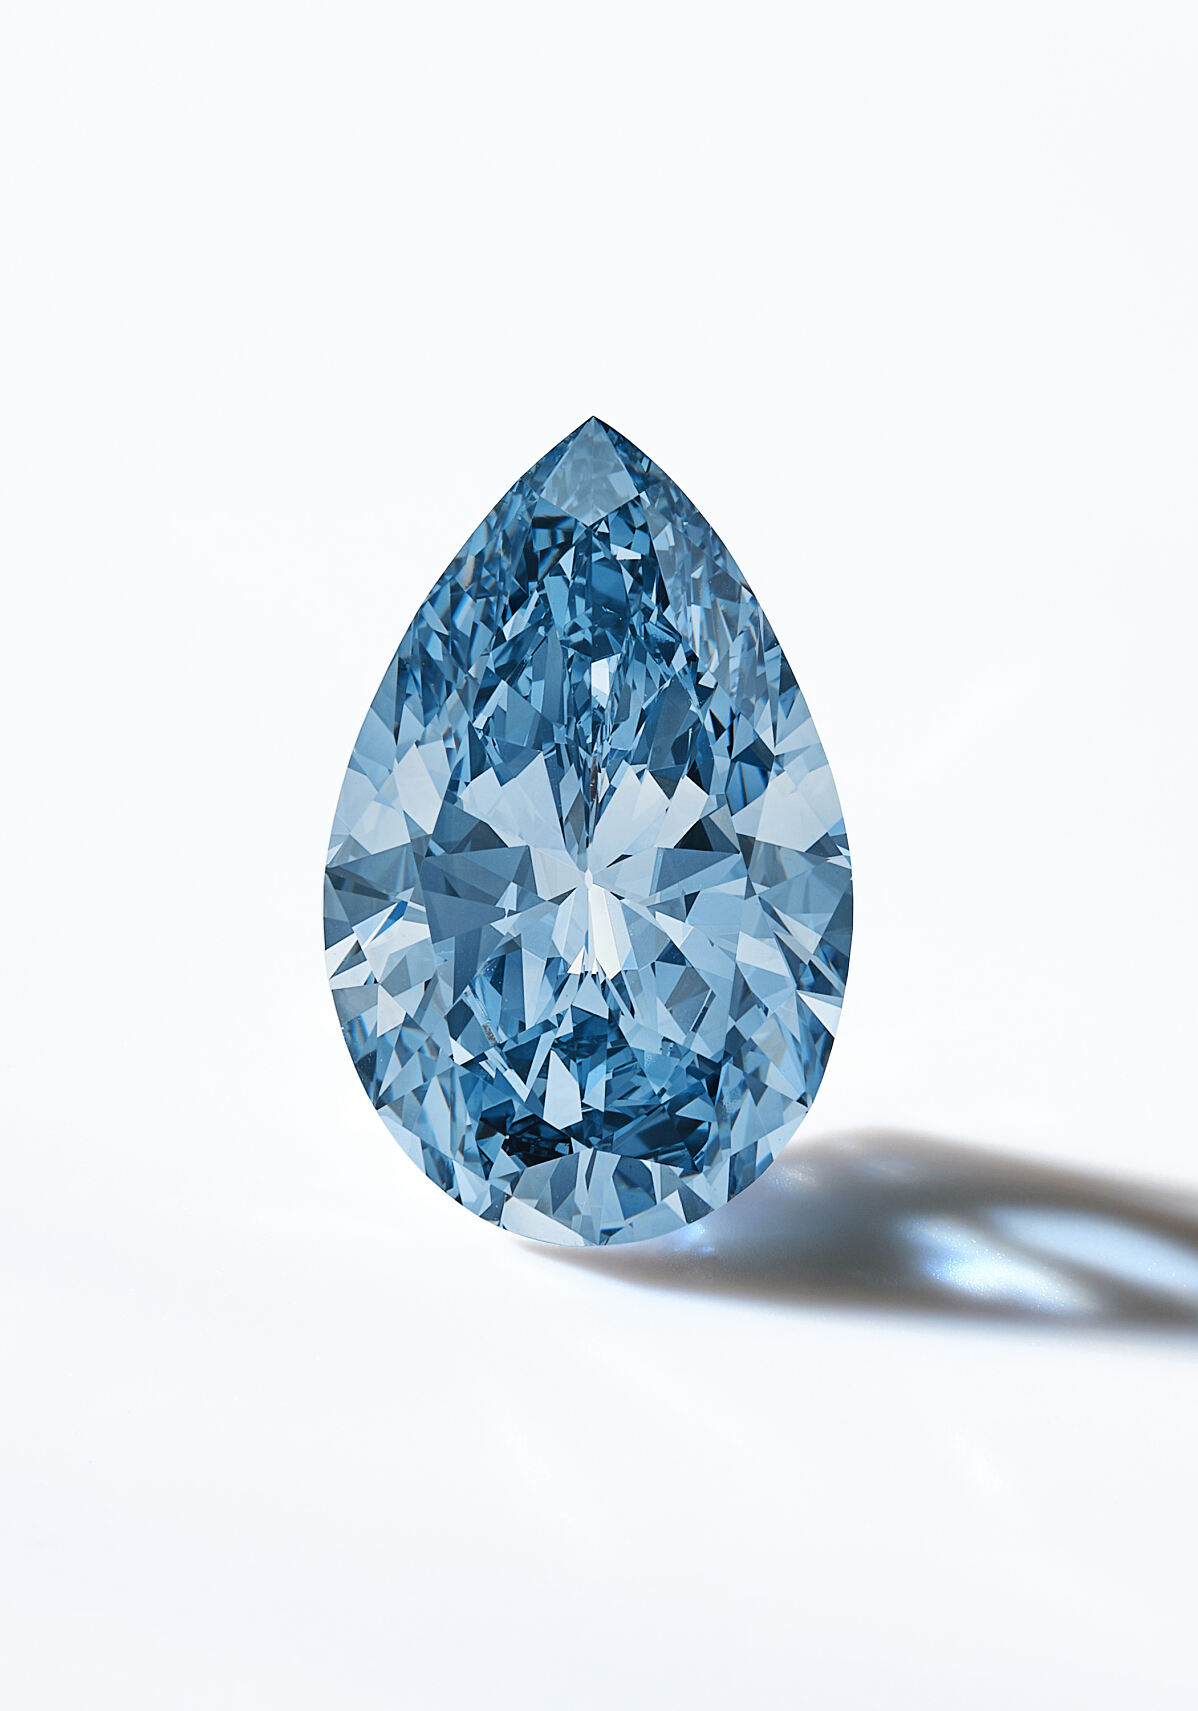 Bulgari Laguna Blu, 11.16 carats, To be sold at Sothebys Geneva Luxury Week (1)